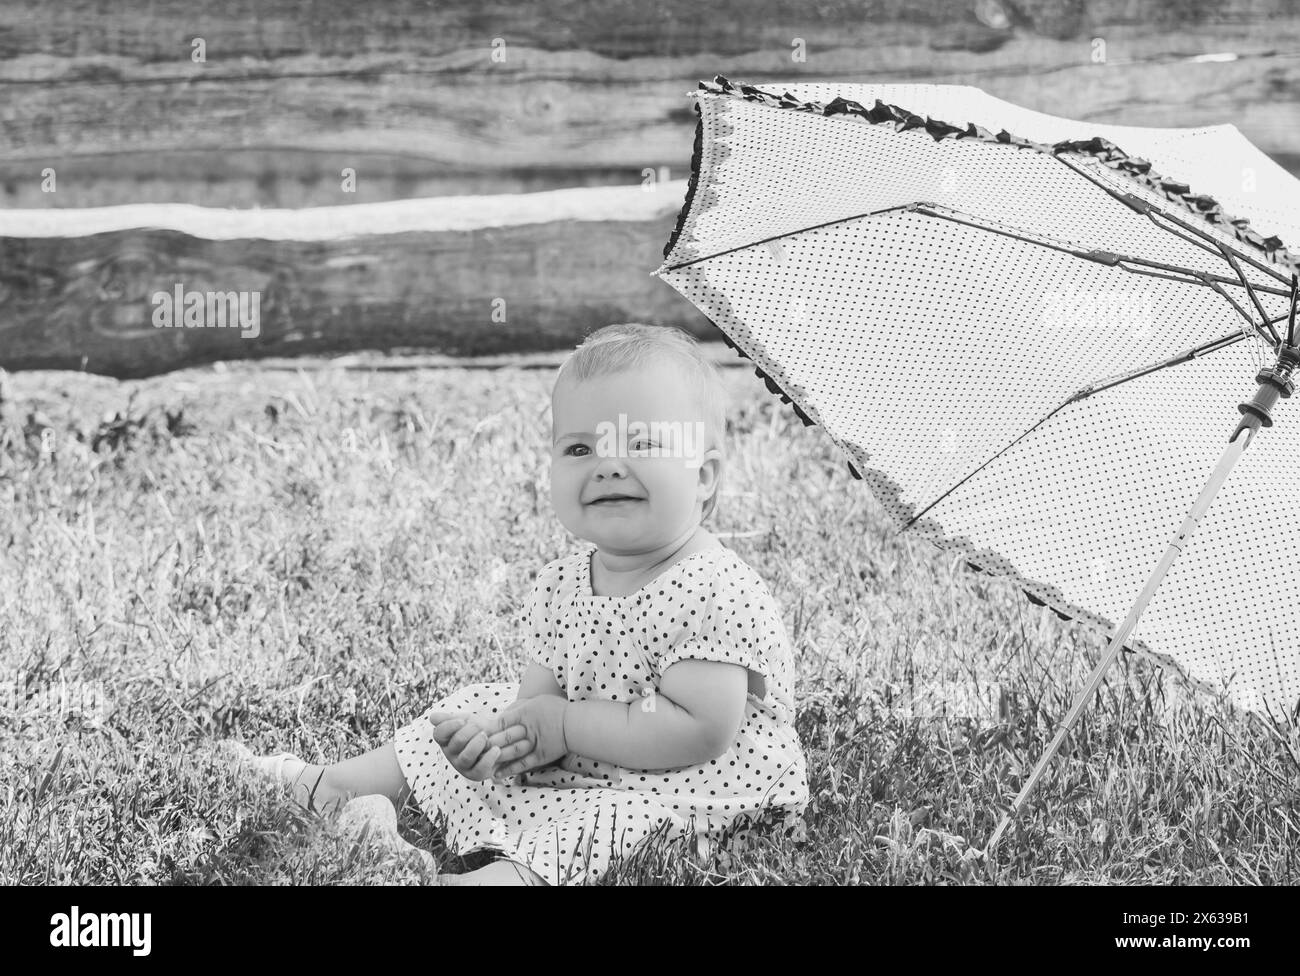 beautiful baby in a polka-dot dress is sitting nea umbrella umbrella Stock Photo